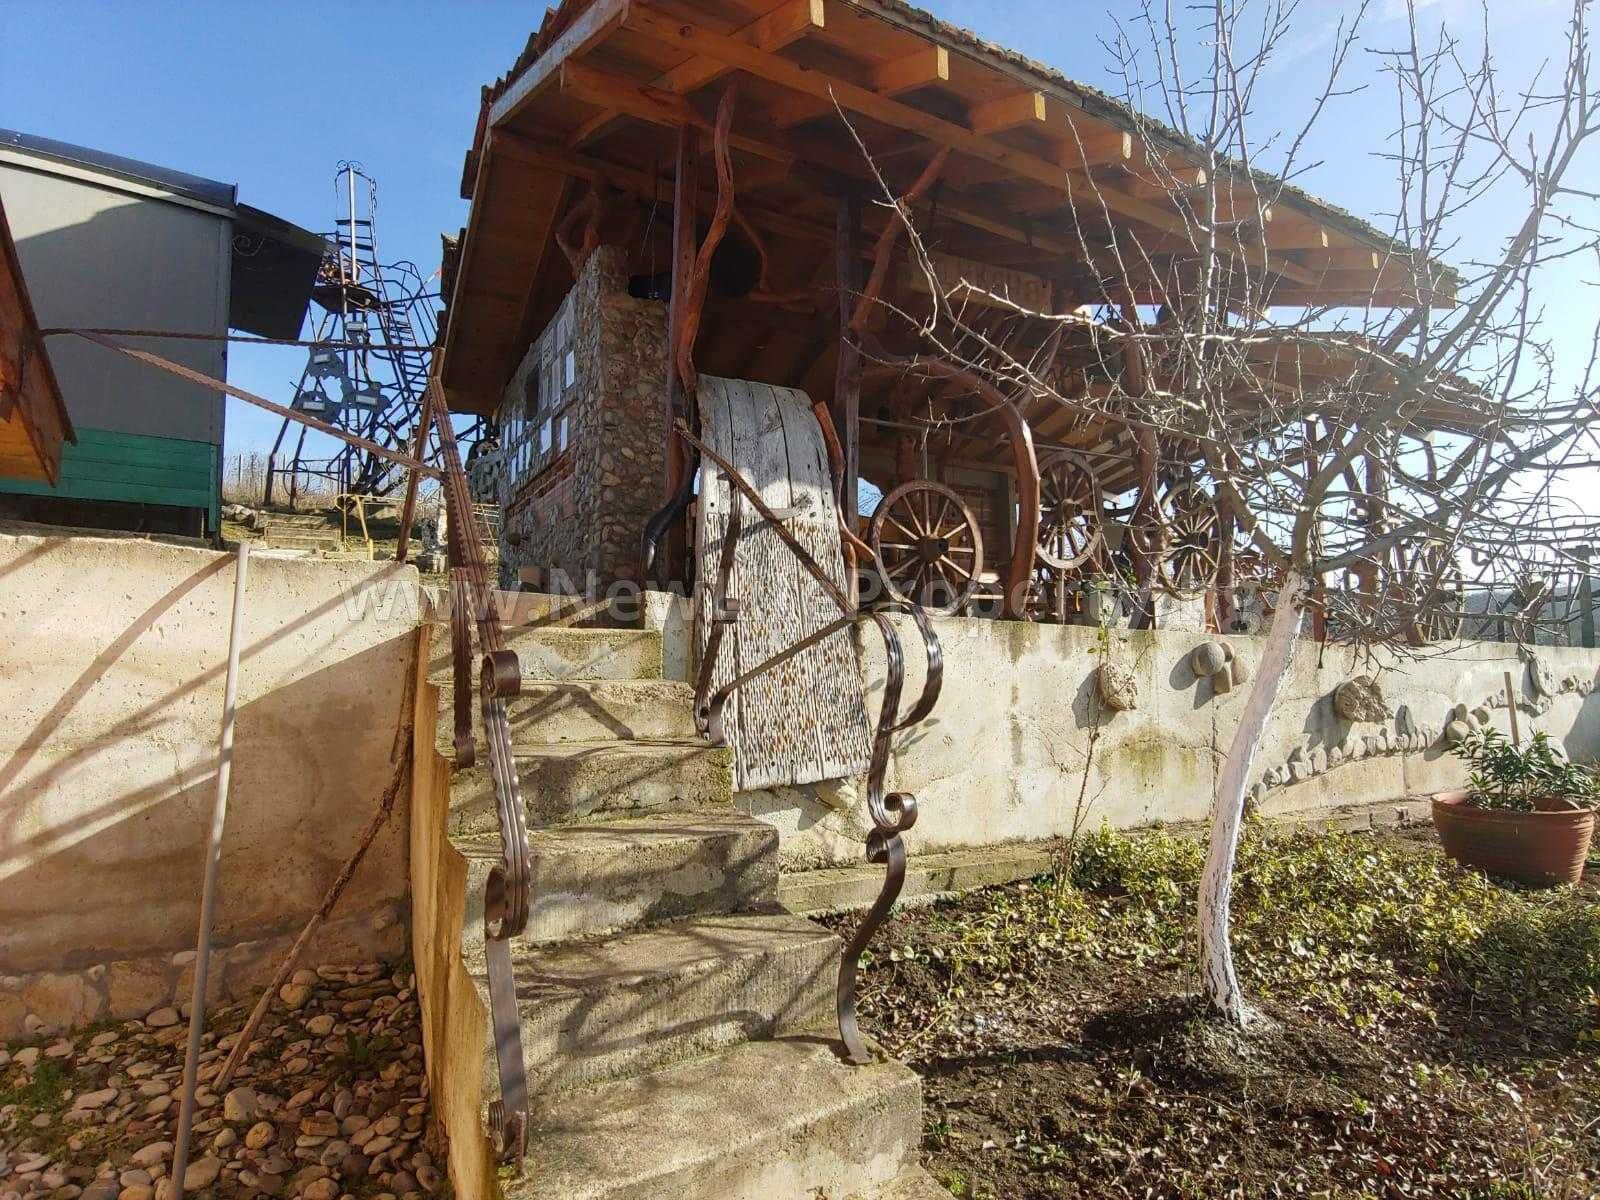 Хотелски комплекс "Чудесата на Корена" в село Драчево, област Бургас.